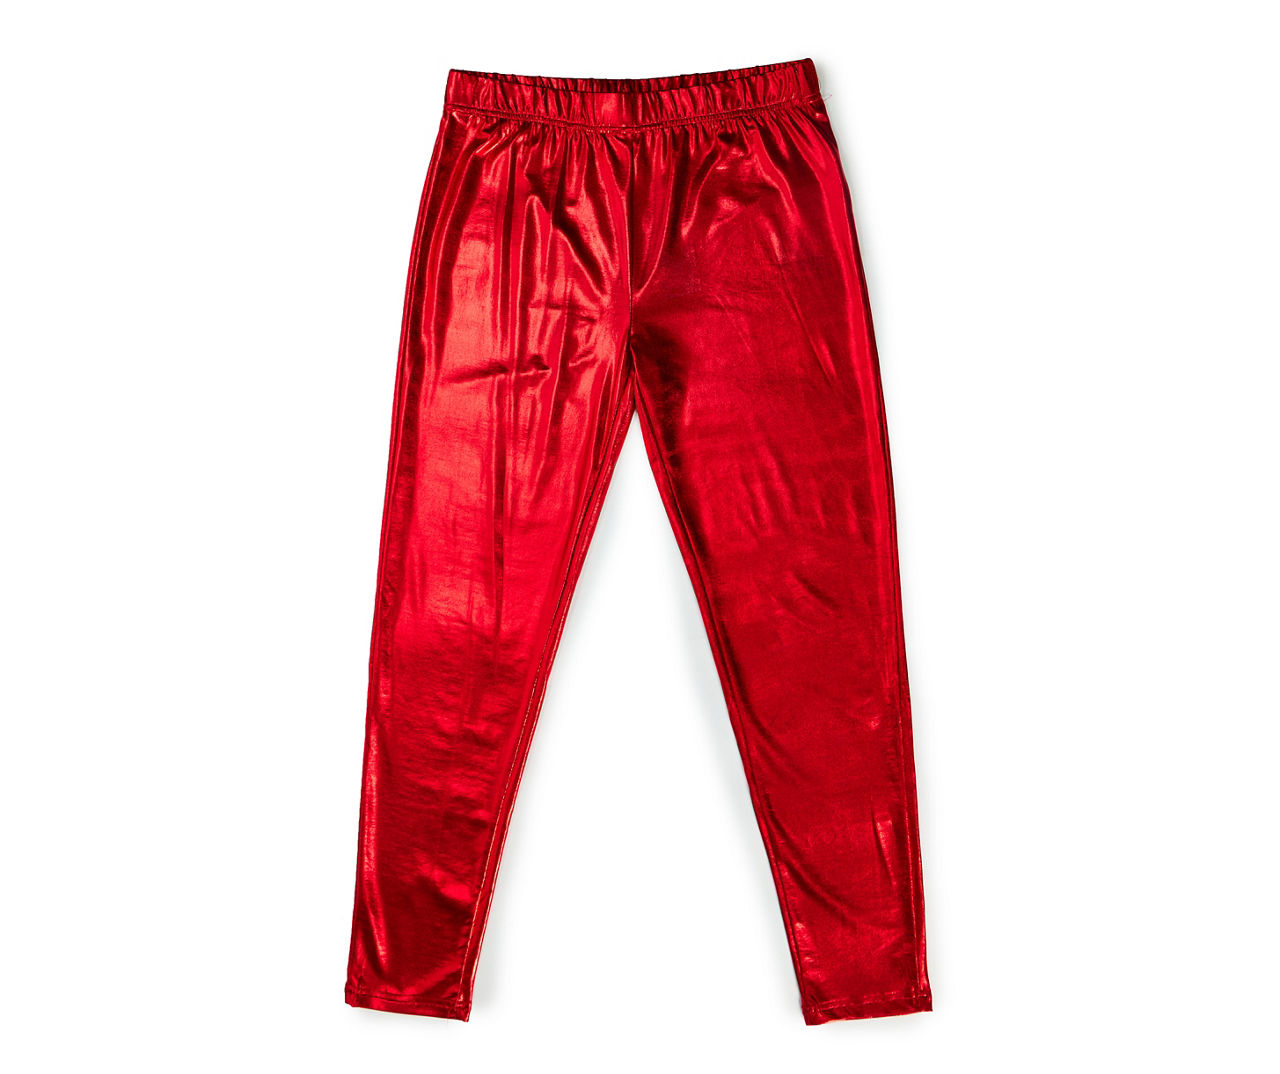 BRATS N BEAUTY®-Women/Ladies/Girl Slimfit Cotton Printed Legging Red Color